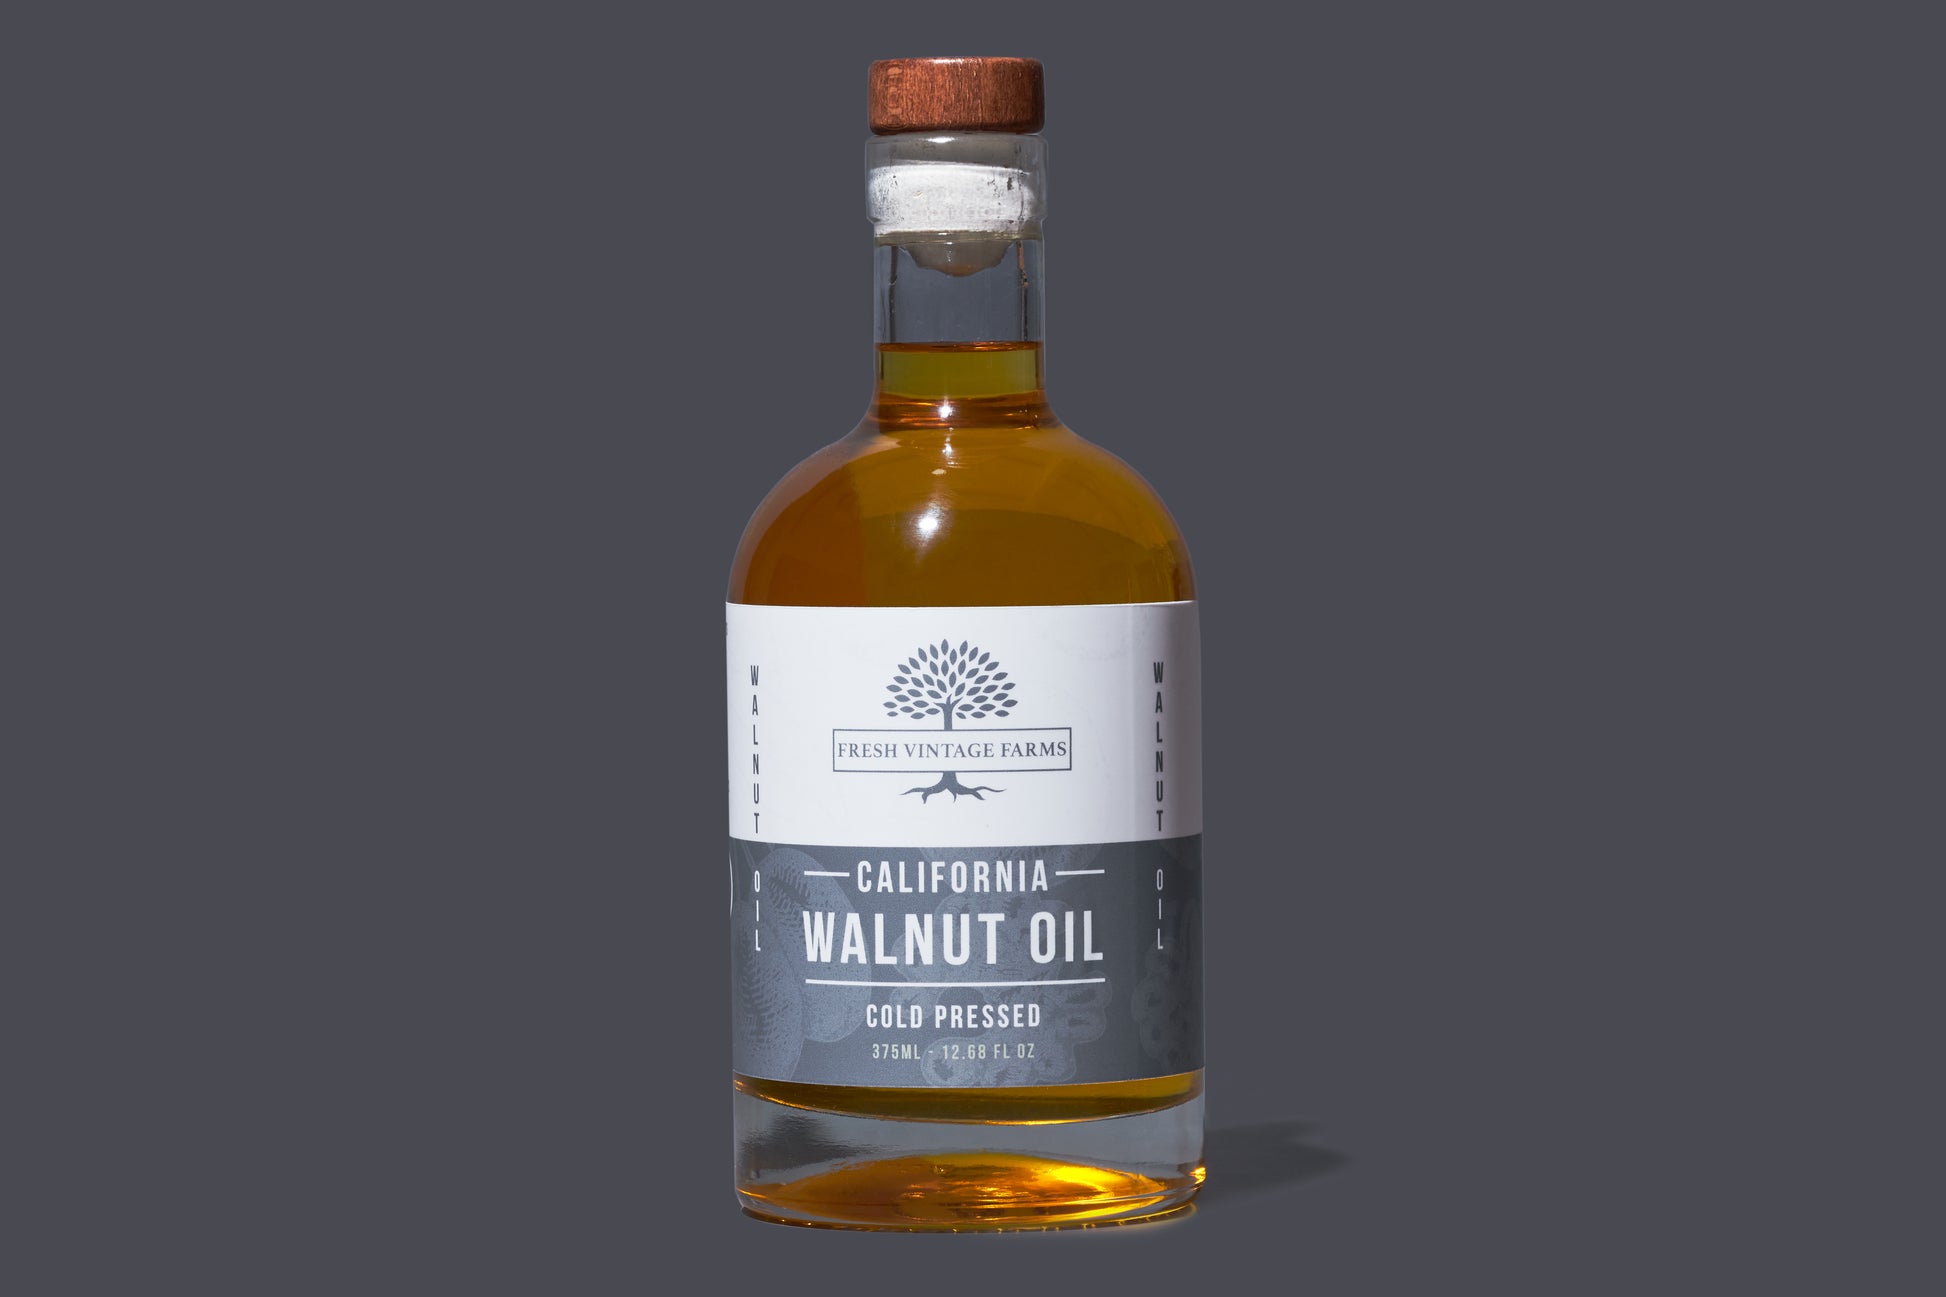 Walnut Oil, cold-pressed